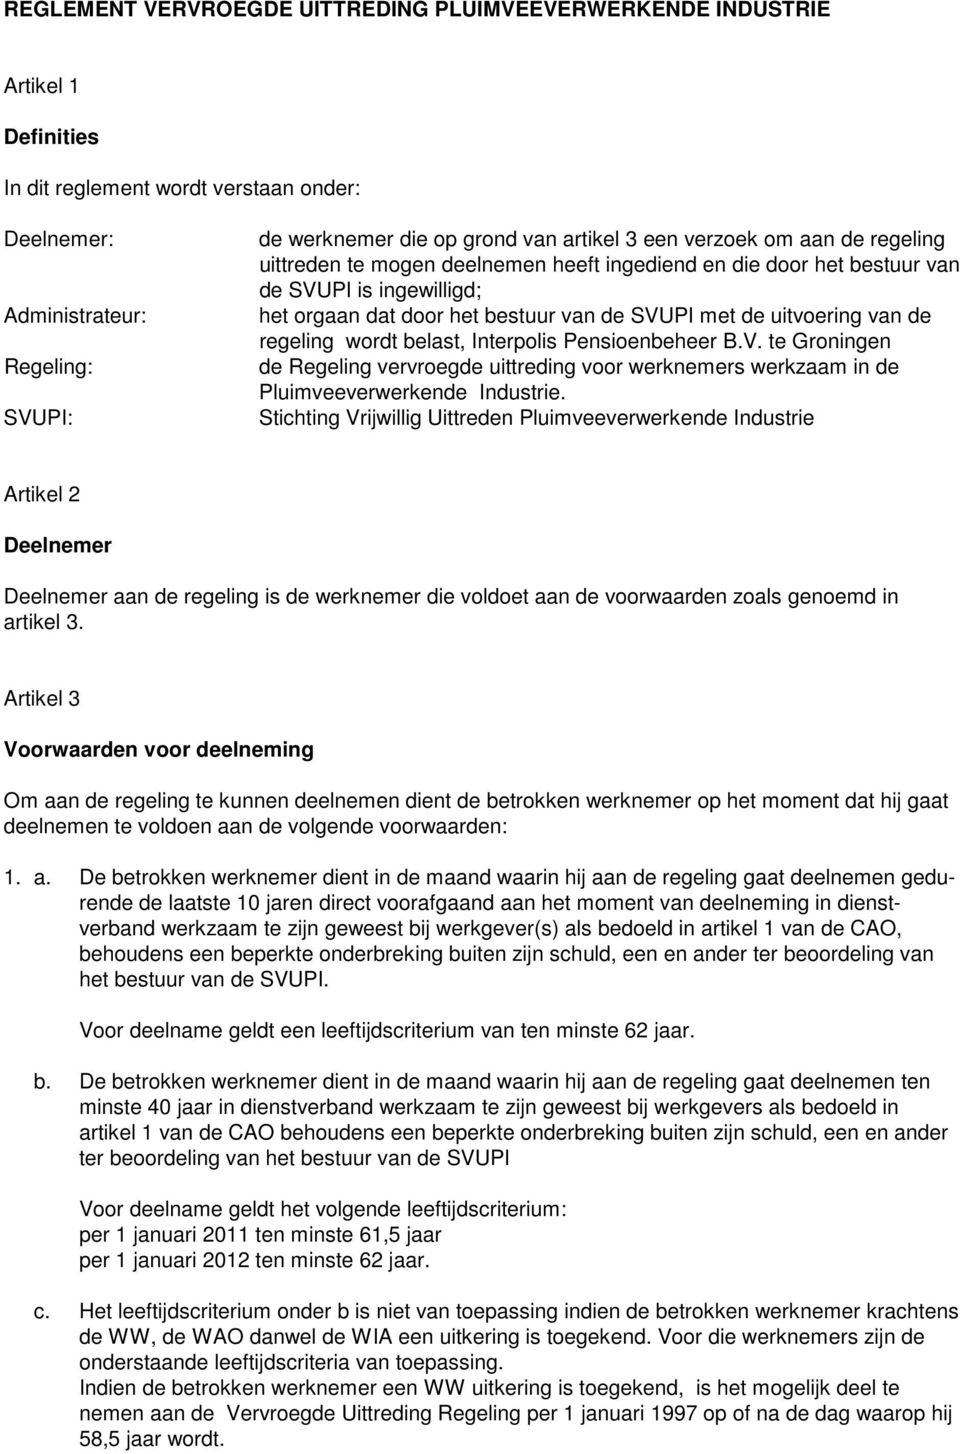 uitvoering van de regeling wordt belast, Interpolis Pensioenbeheer B.V. te Groningen de Regeling vervroegde uittreding voor werknemers werkzaam in de Pluimveeverwerkende Industrie.